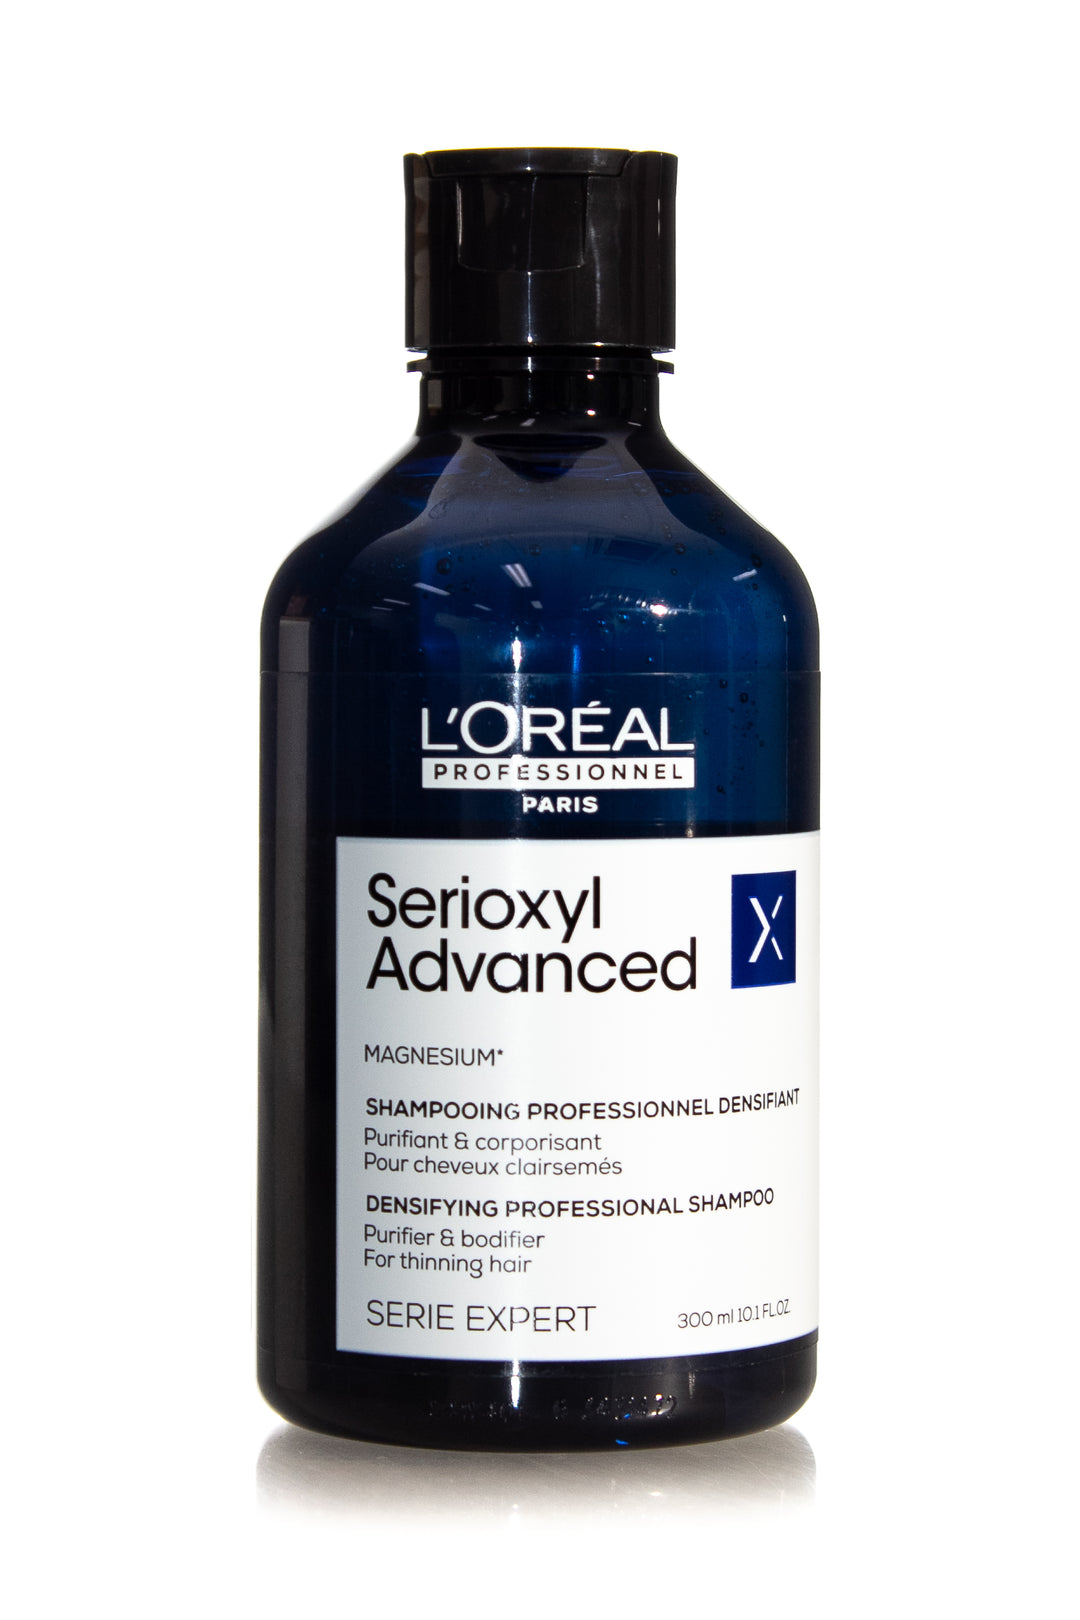 L'Oreal Serioxyl Advanced Densifying Shampoo